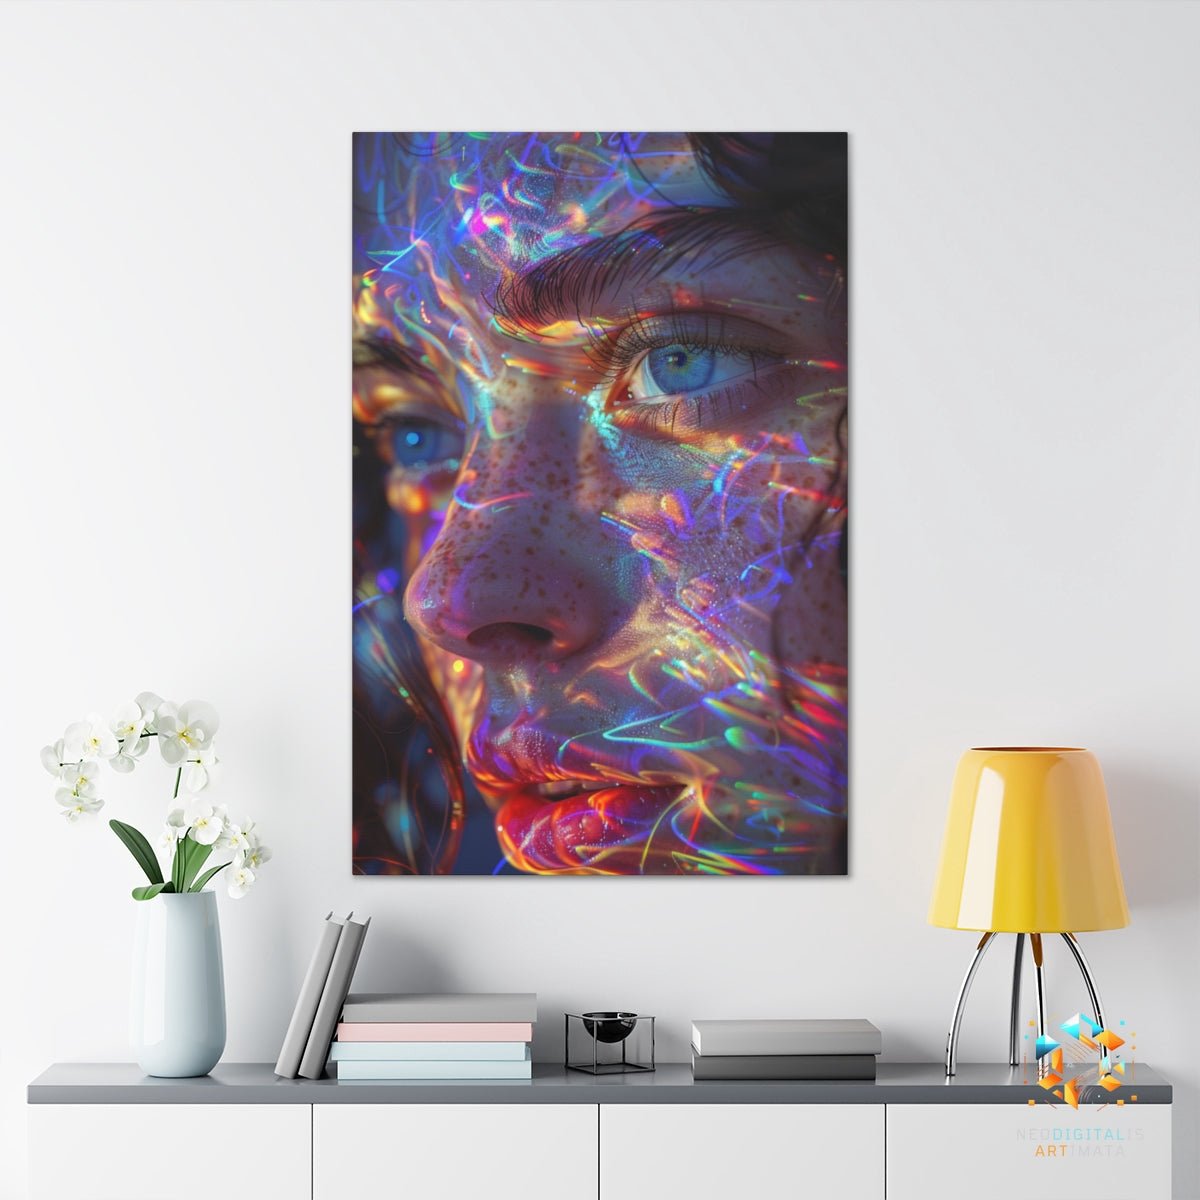 Color Dream Reflections - Original Kaleidoscopic Style Portrait Wall Art - NeoDIGITALis ARTimata